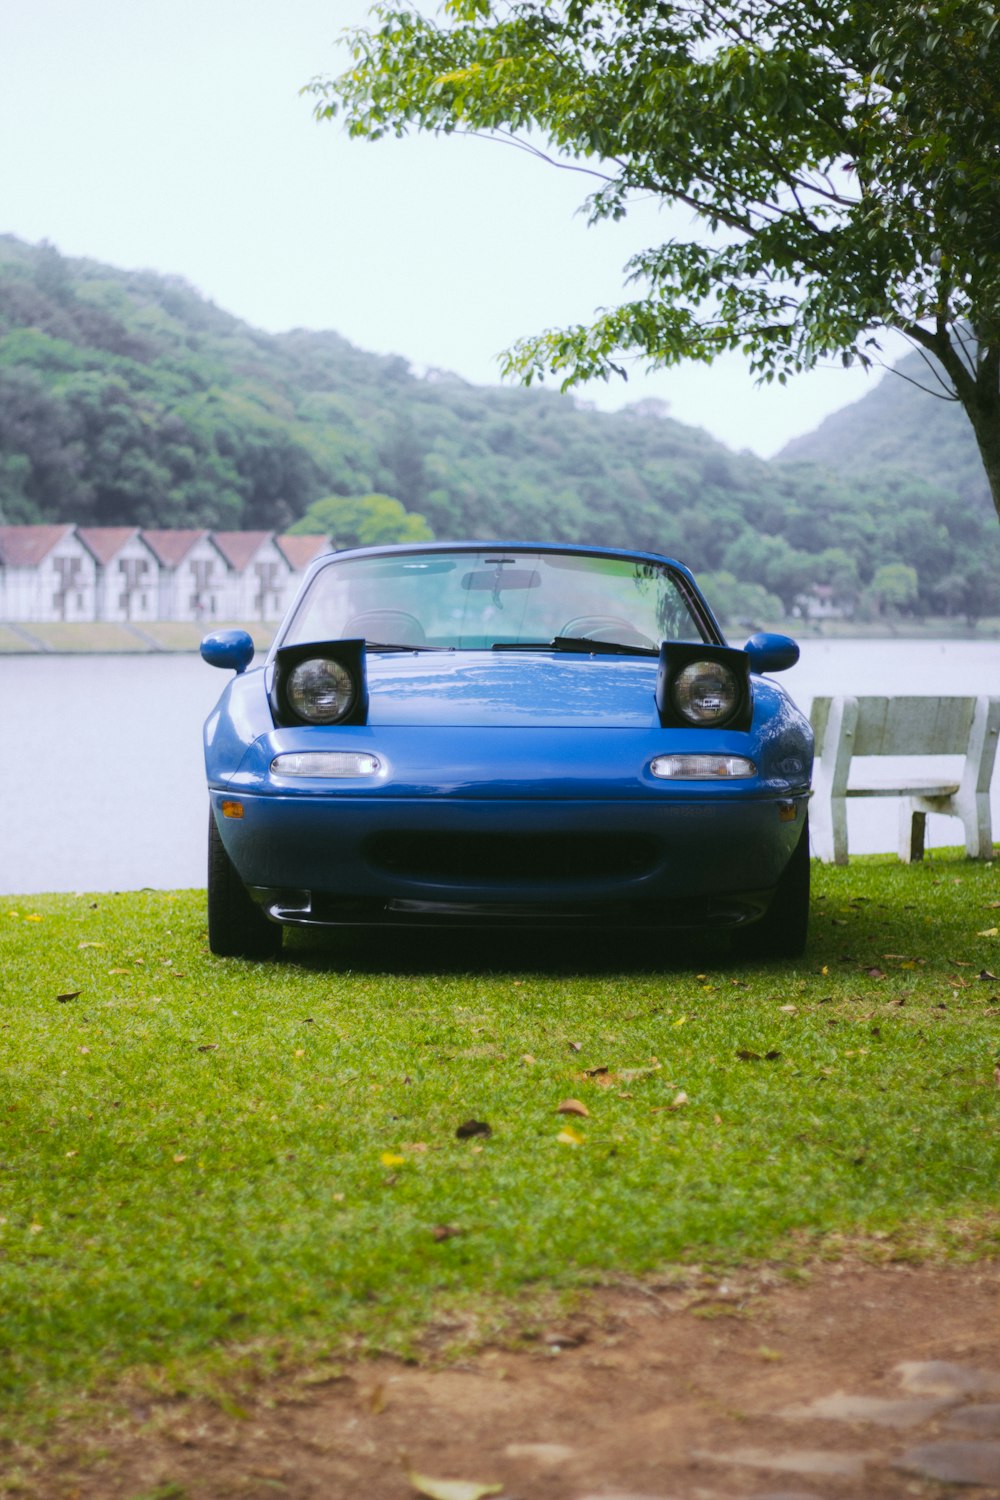 a blue sports car parked next to a lake